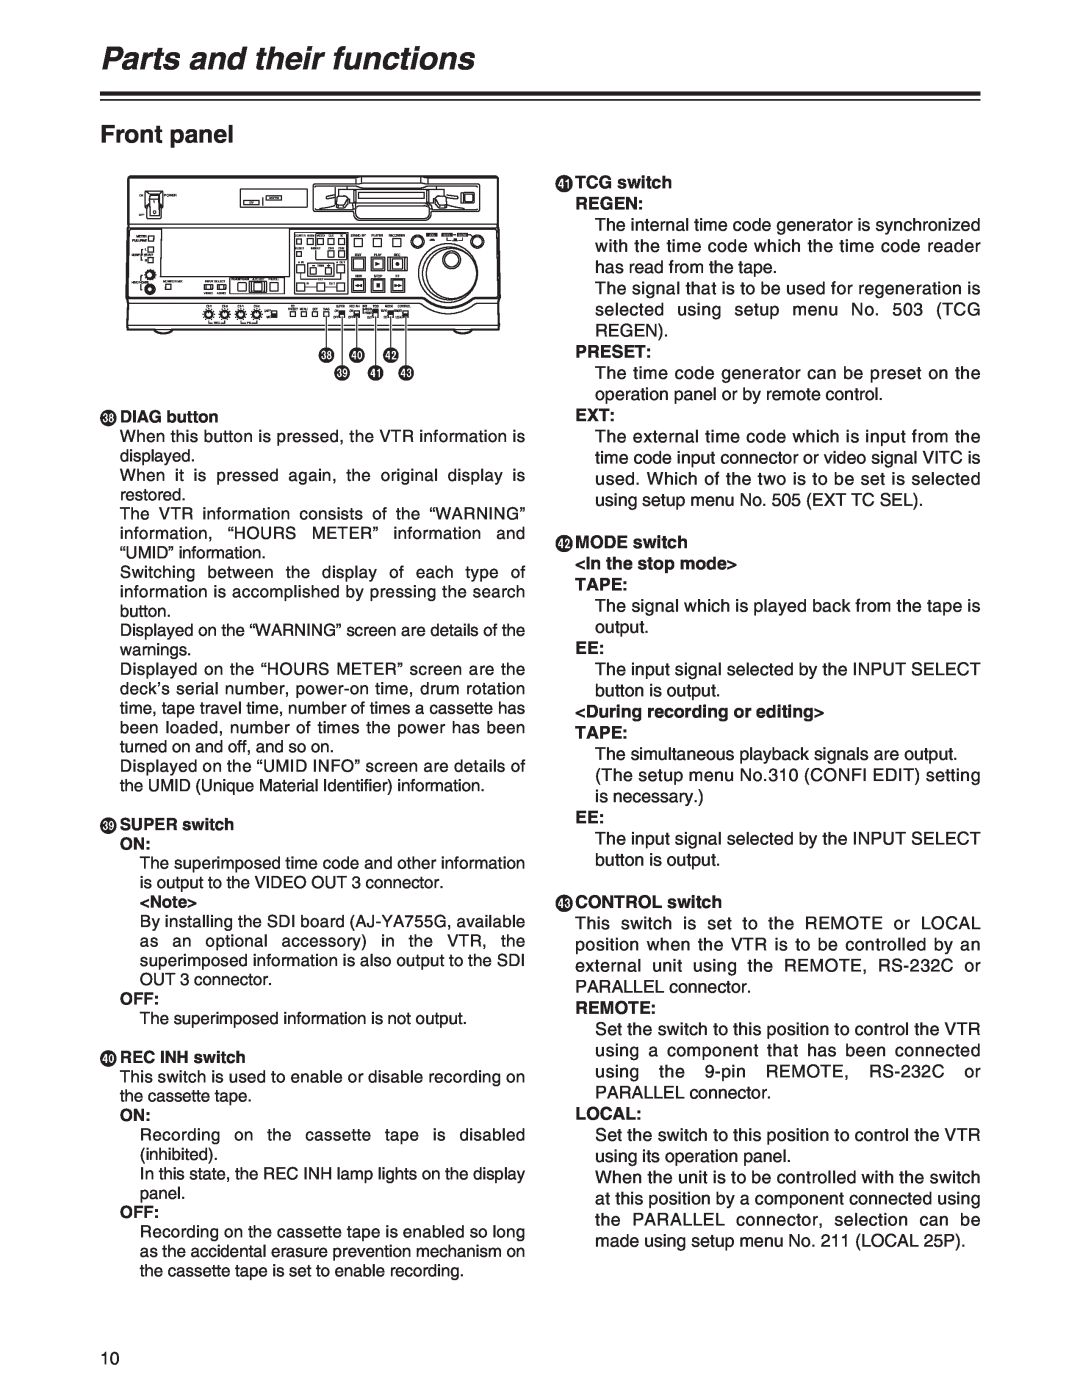 Panasonic AJ-SD755 V DIAG button, W SUPER switch ON, X REC INH switch, Y TCG switch REGEN, Preset, CONTROL switch, Remote 